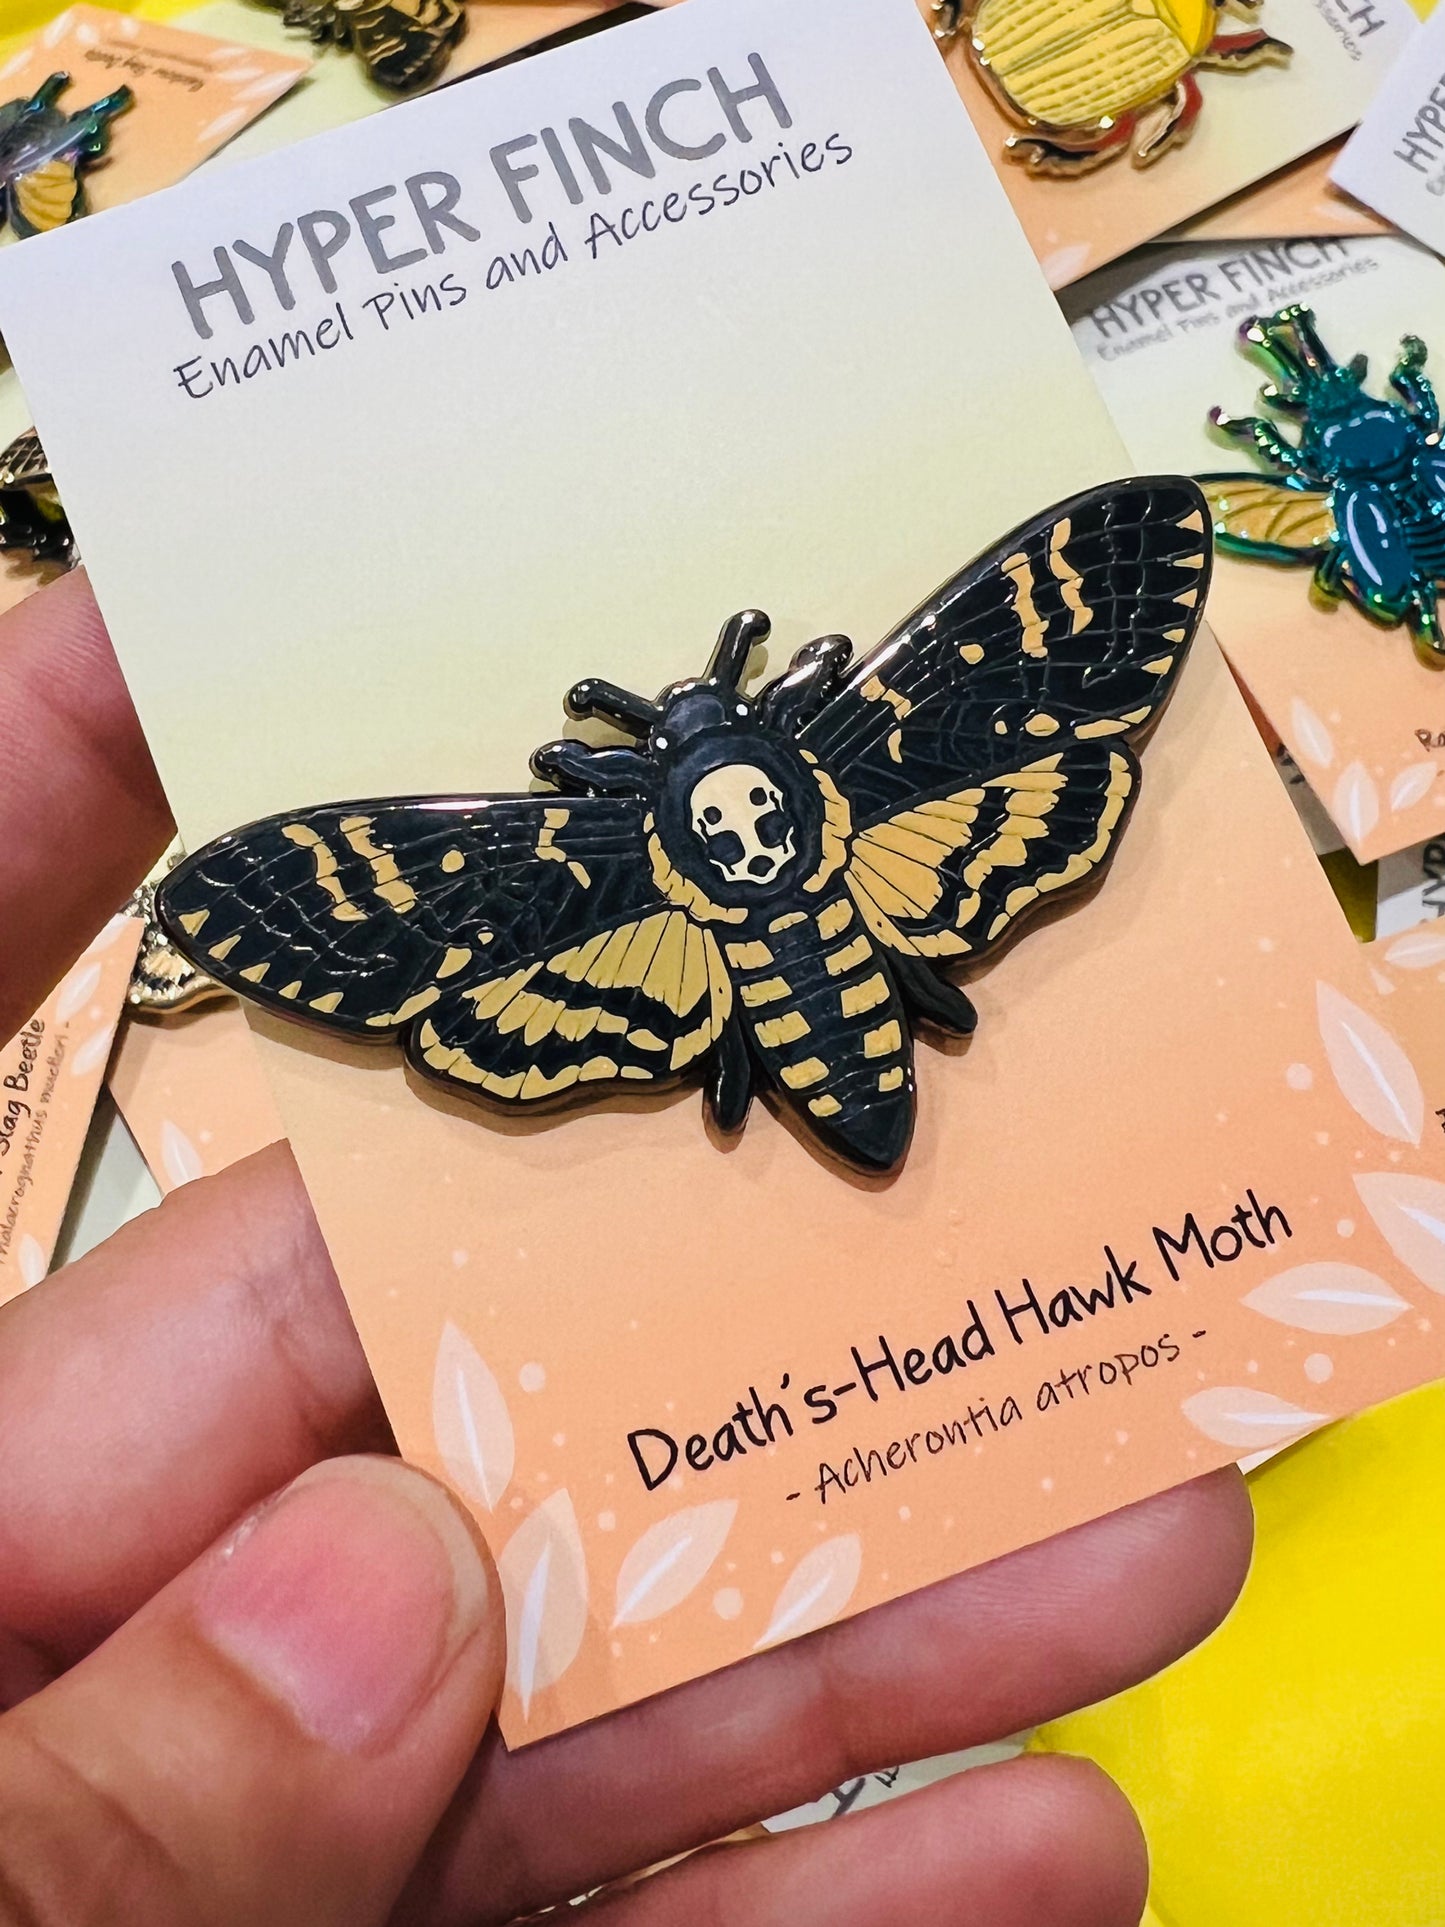 Death's-head hawkmoth pin